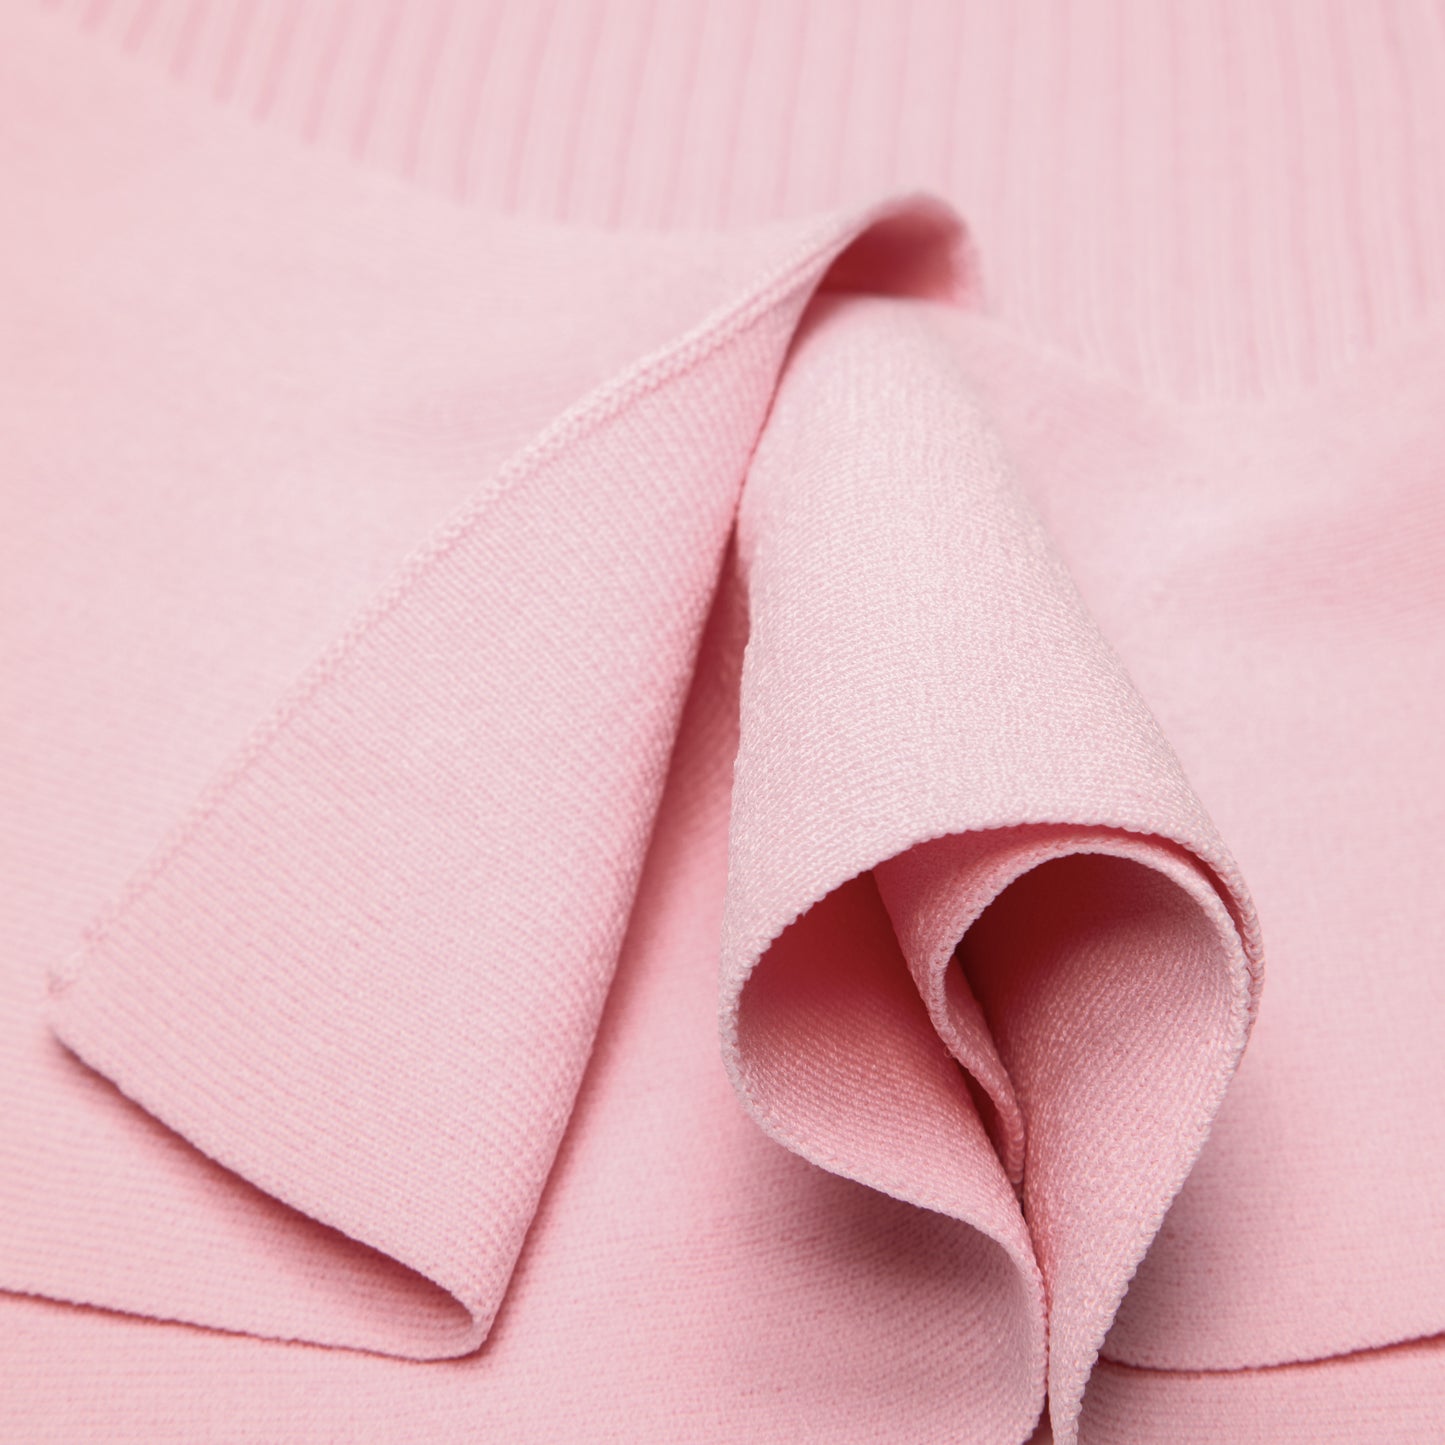 Moschino Jeans Asymmetric Rib Knit Tank Top (Pink)